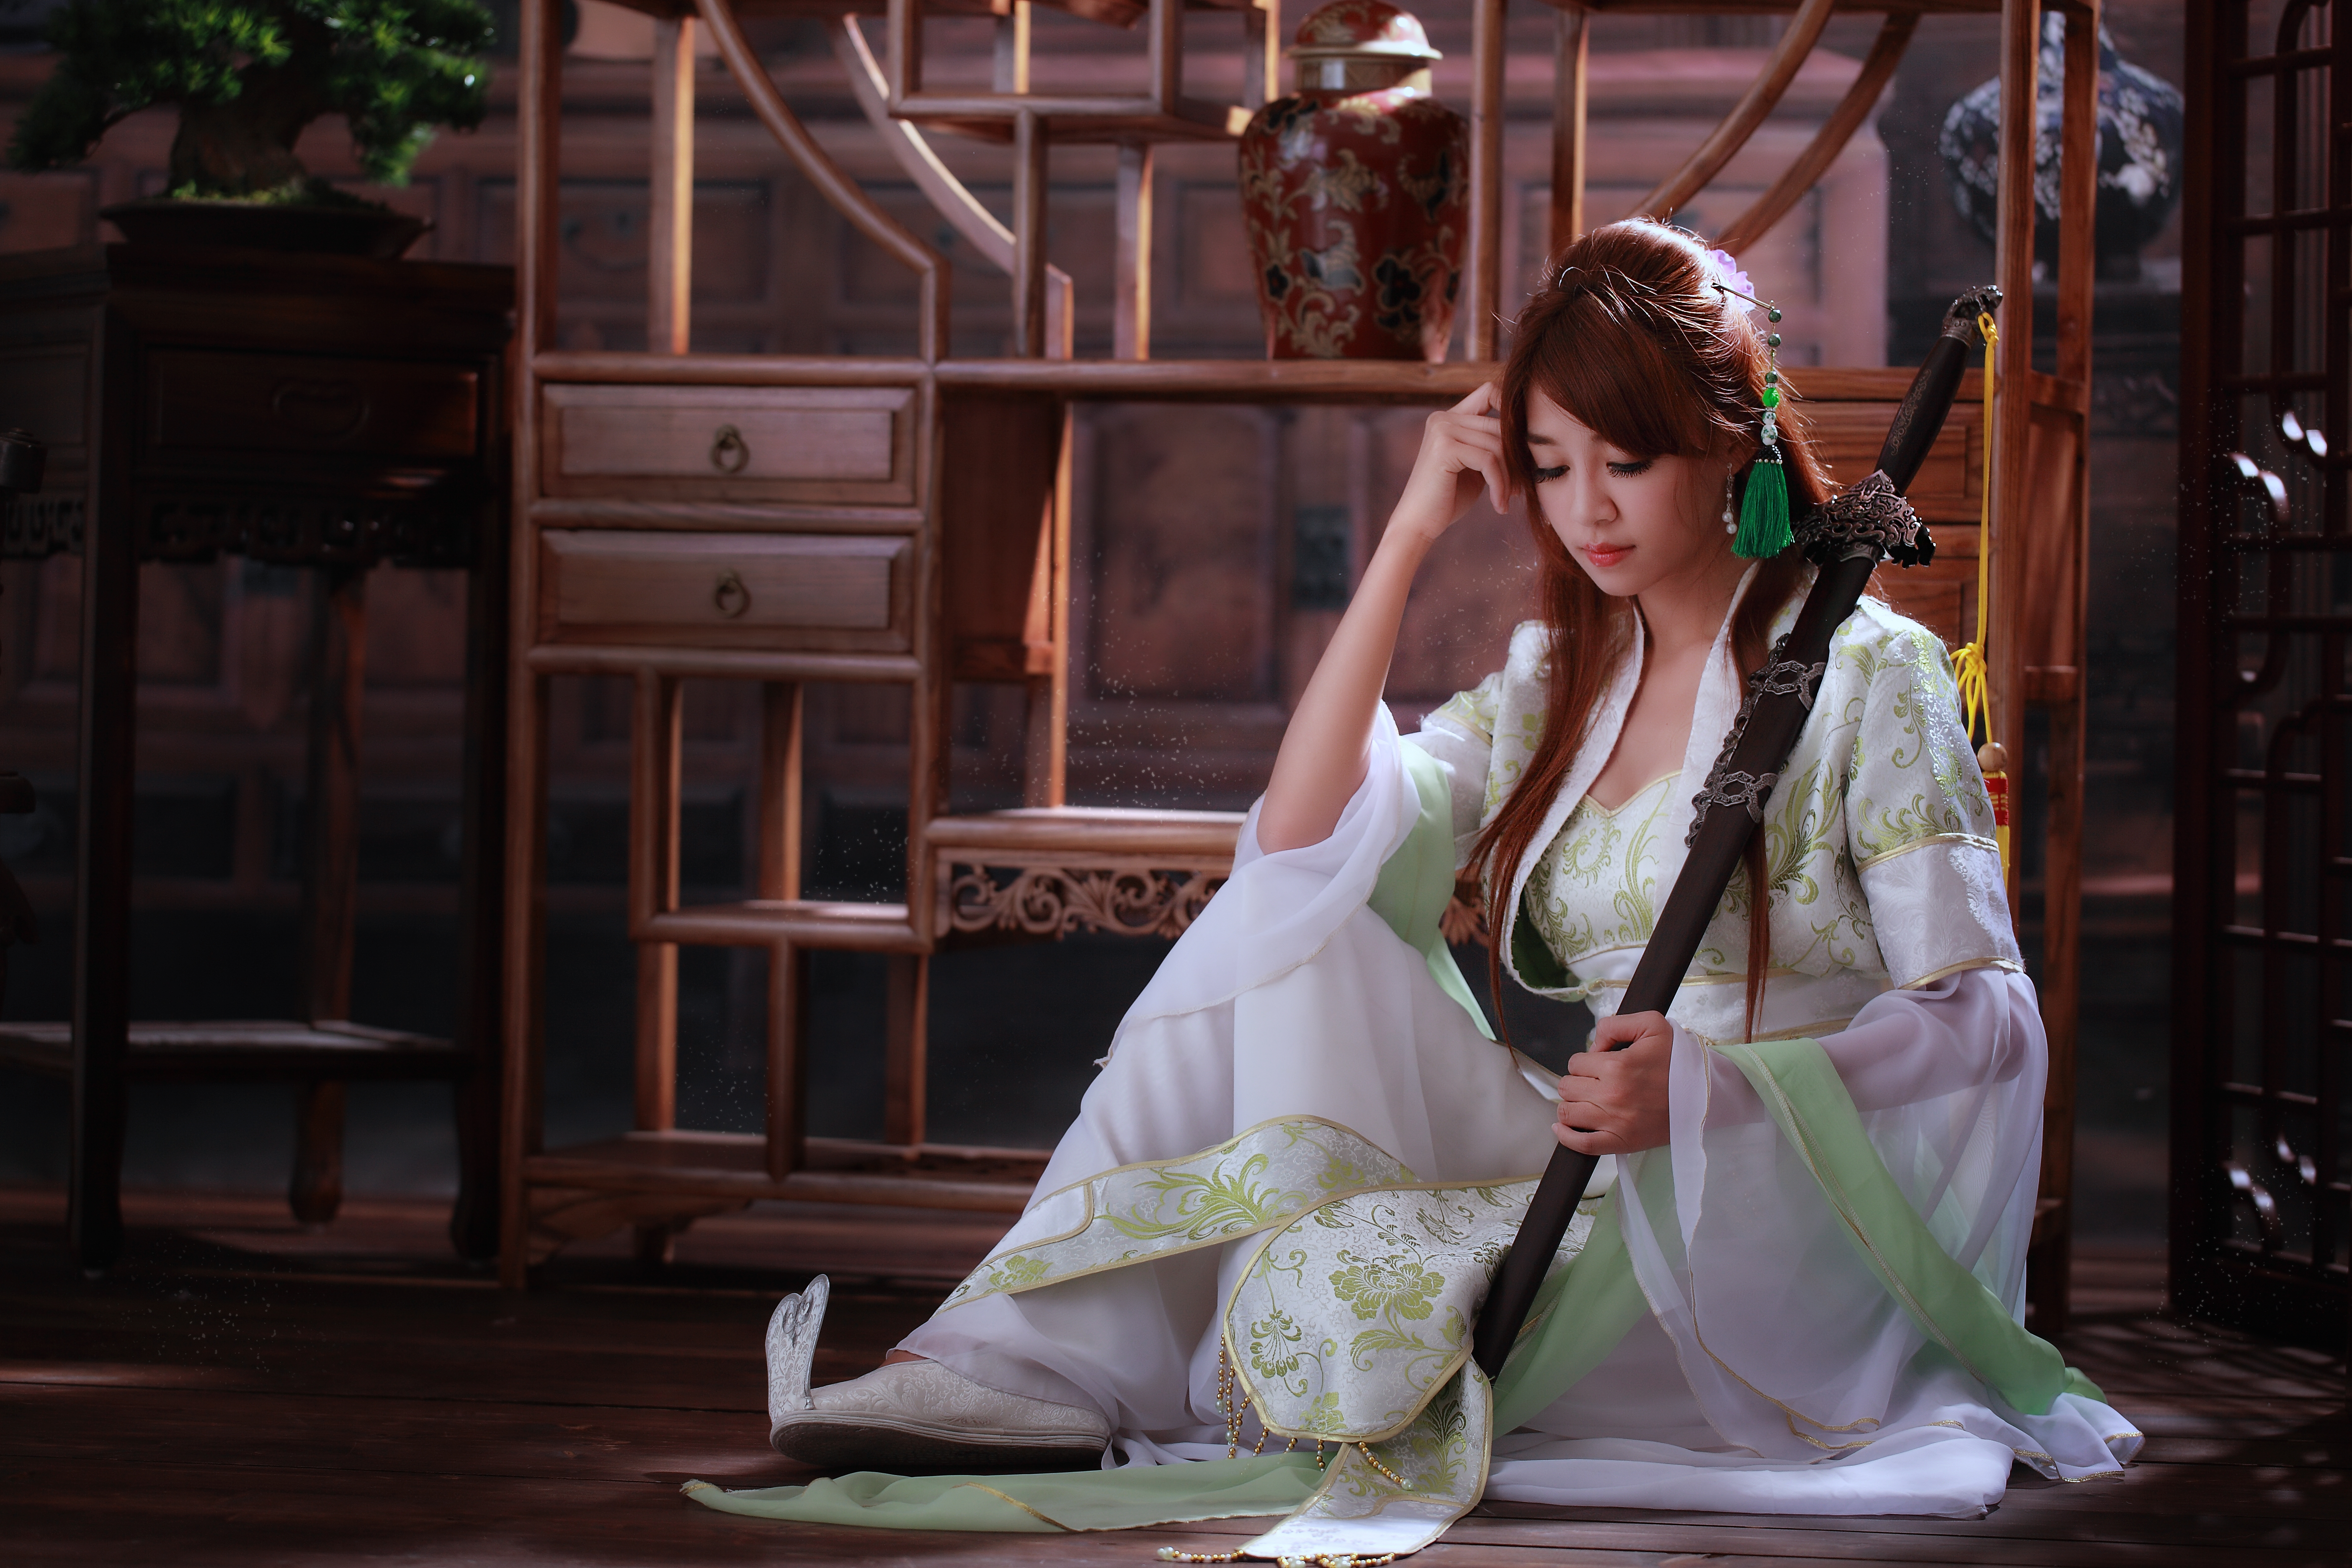 Girl Woman National Dress Asian Sword Vase Xi O Z 5616x3744